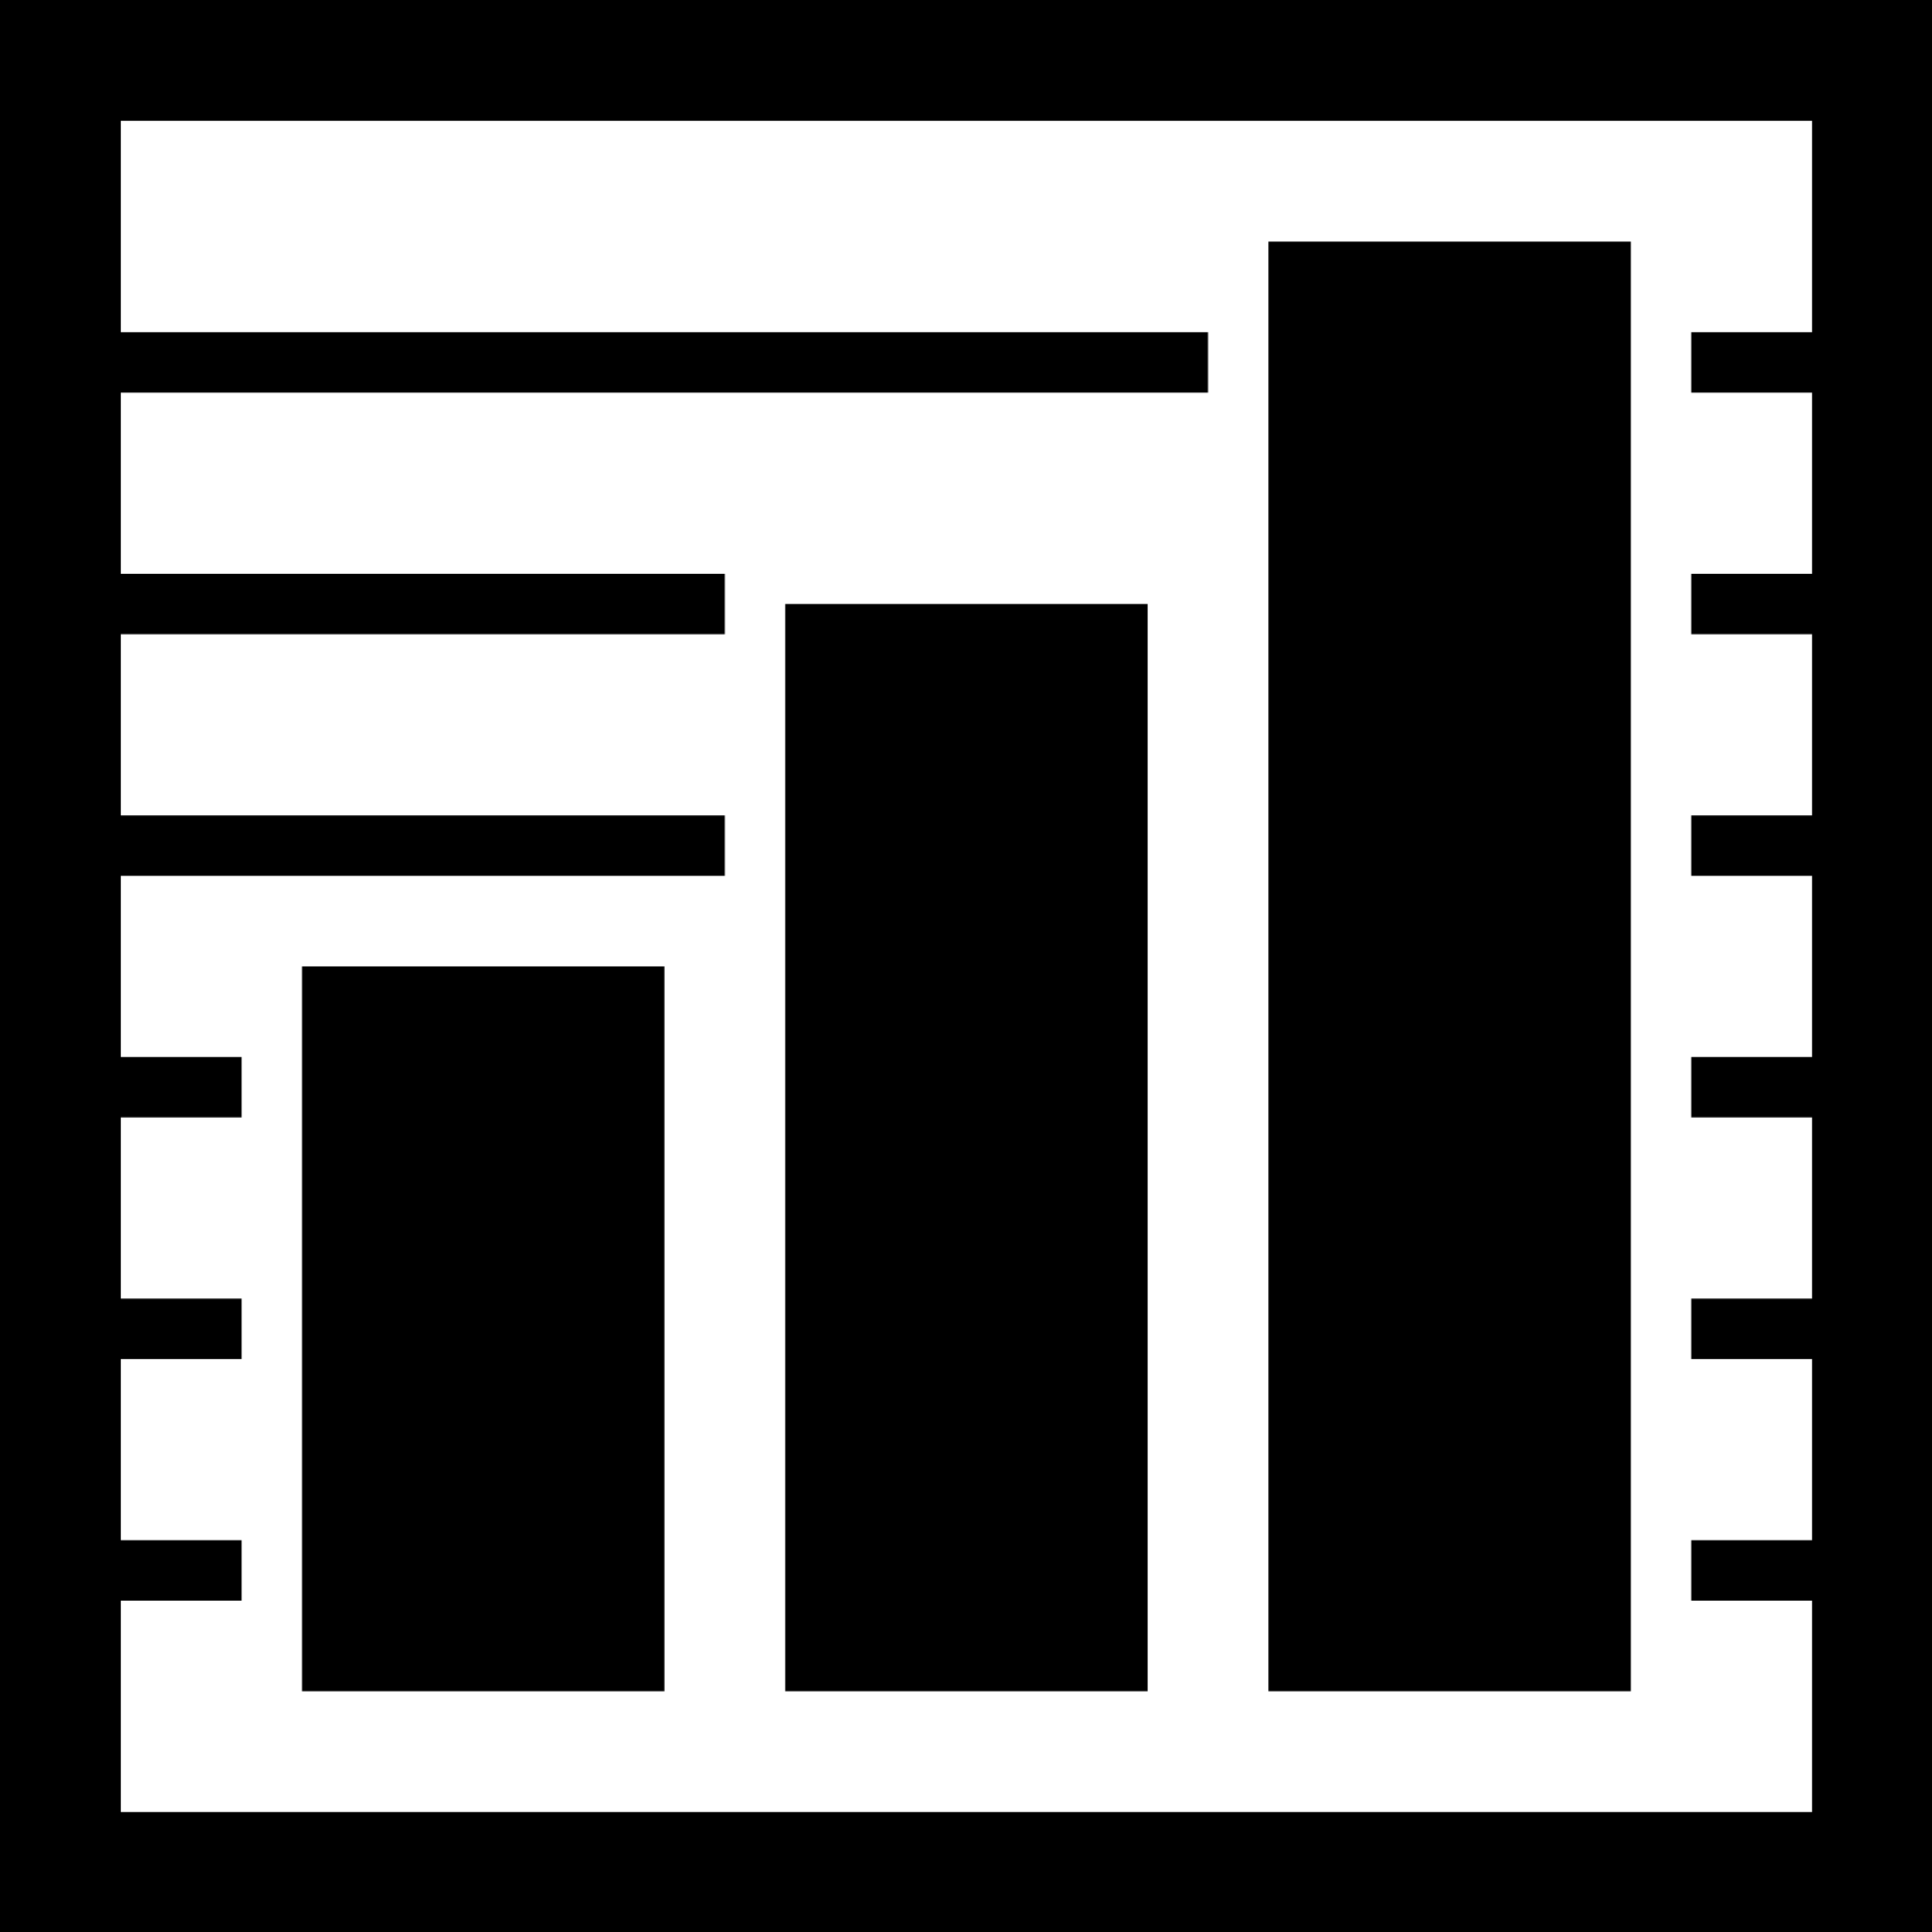 Staafdiagram silhouet